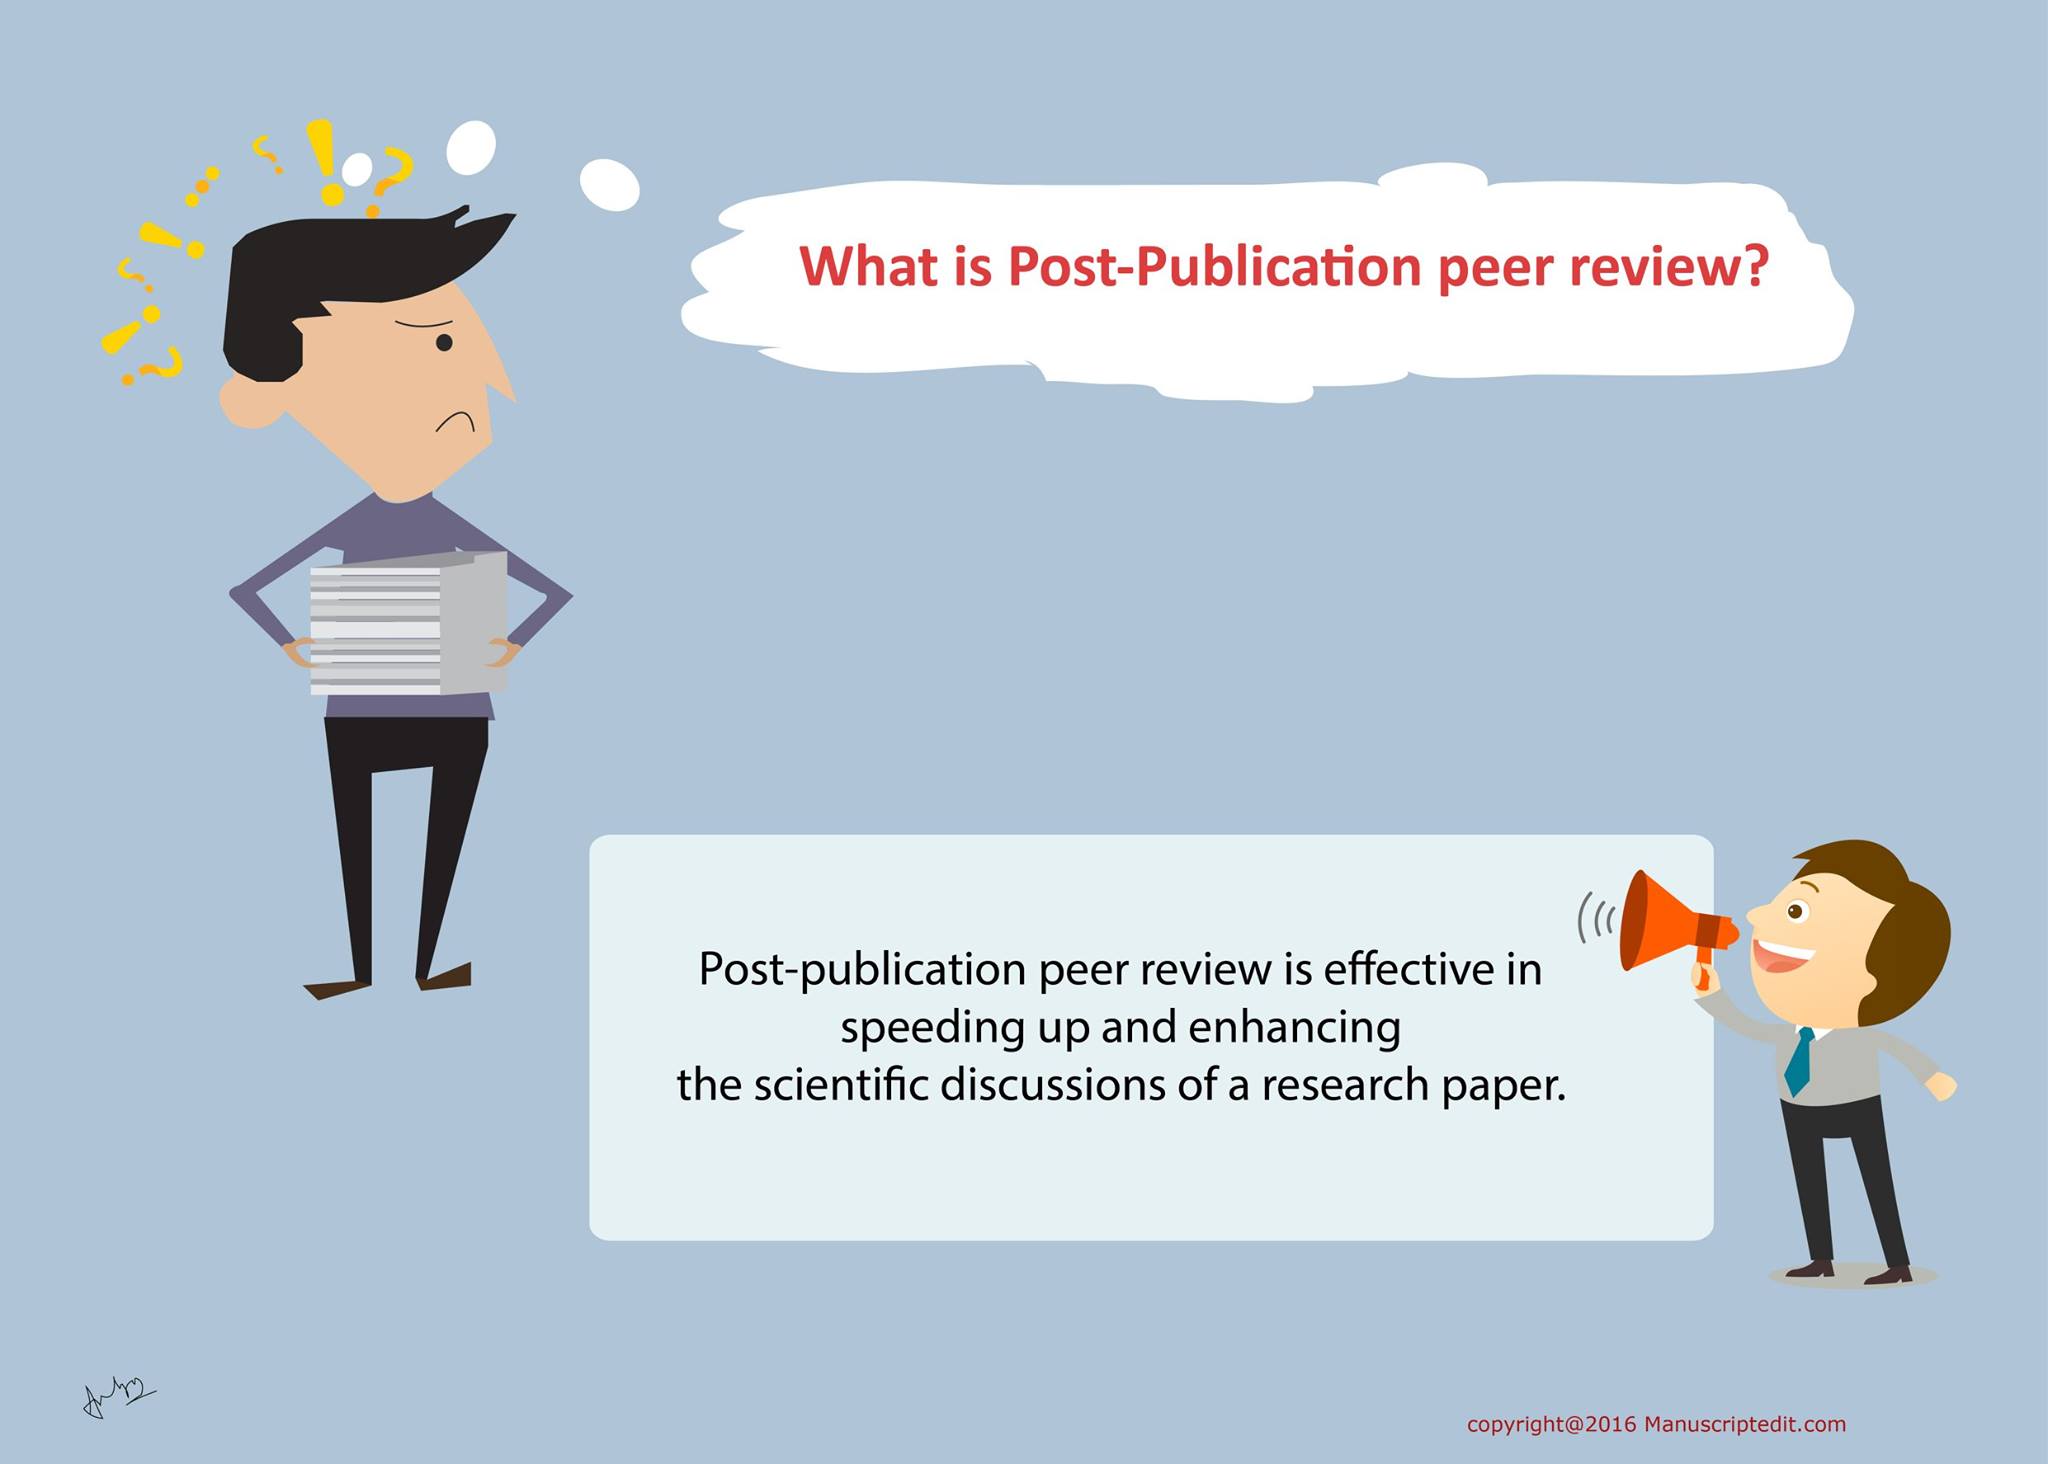 Post-Publication peer review